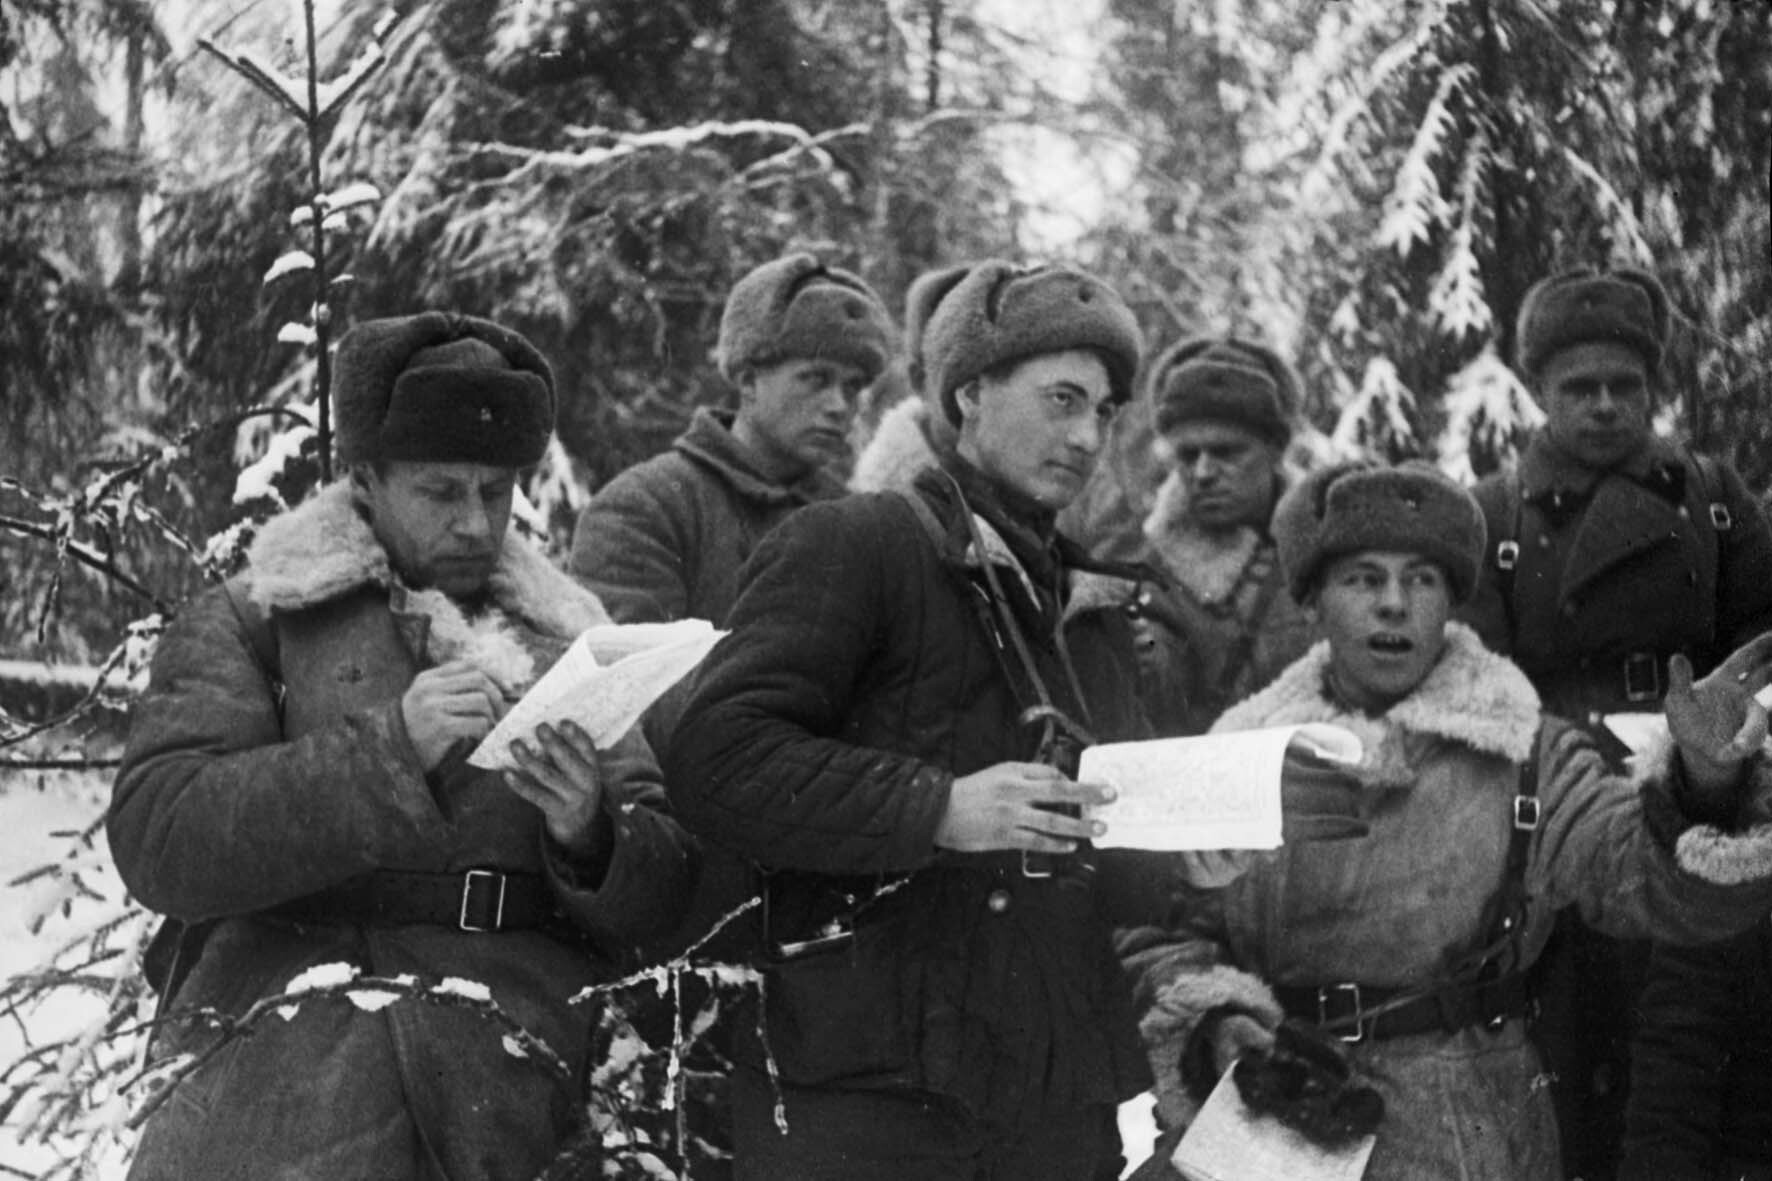 Fotografie: Befehlsausgabe des Regimentskommandeurs an die Unterführer, Kalininer Front, 21. Dezember 1942 (Museum Berlin-Karlshorst RR-P)